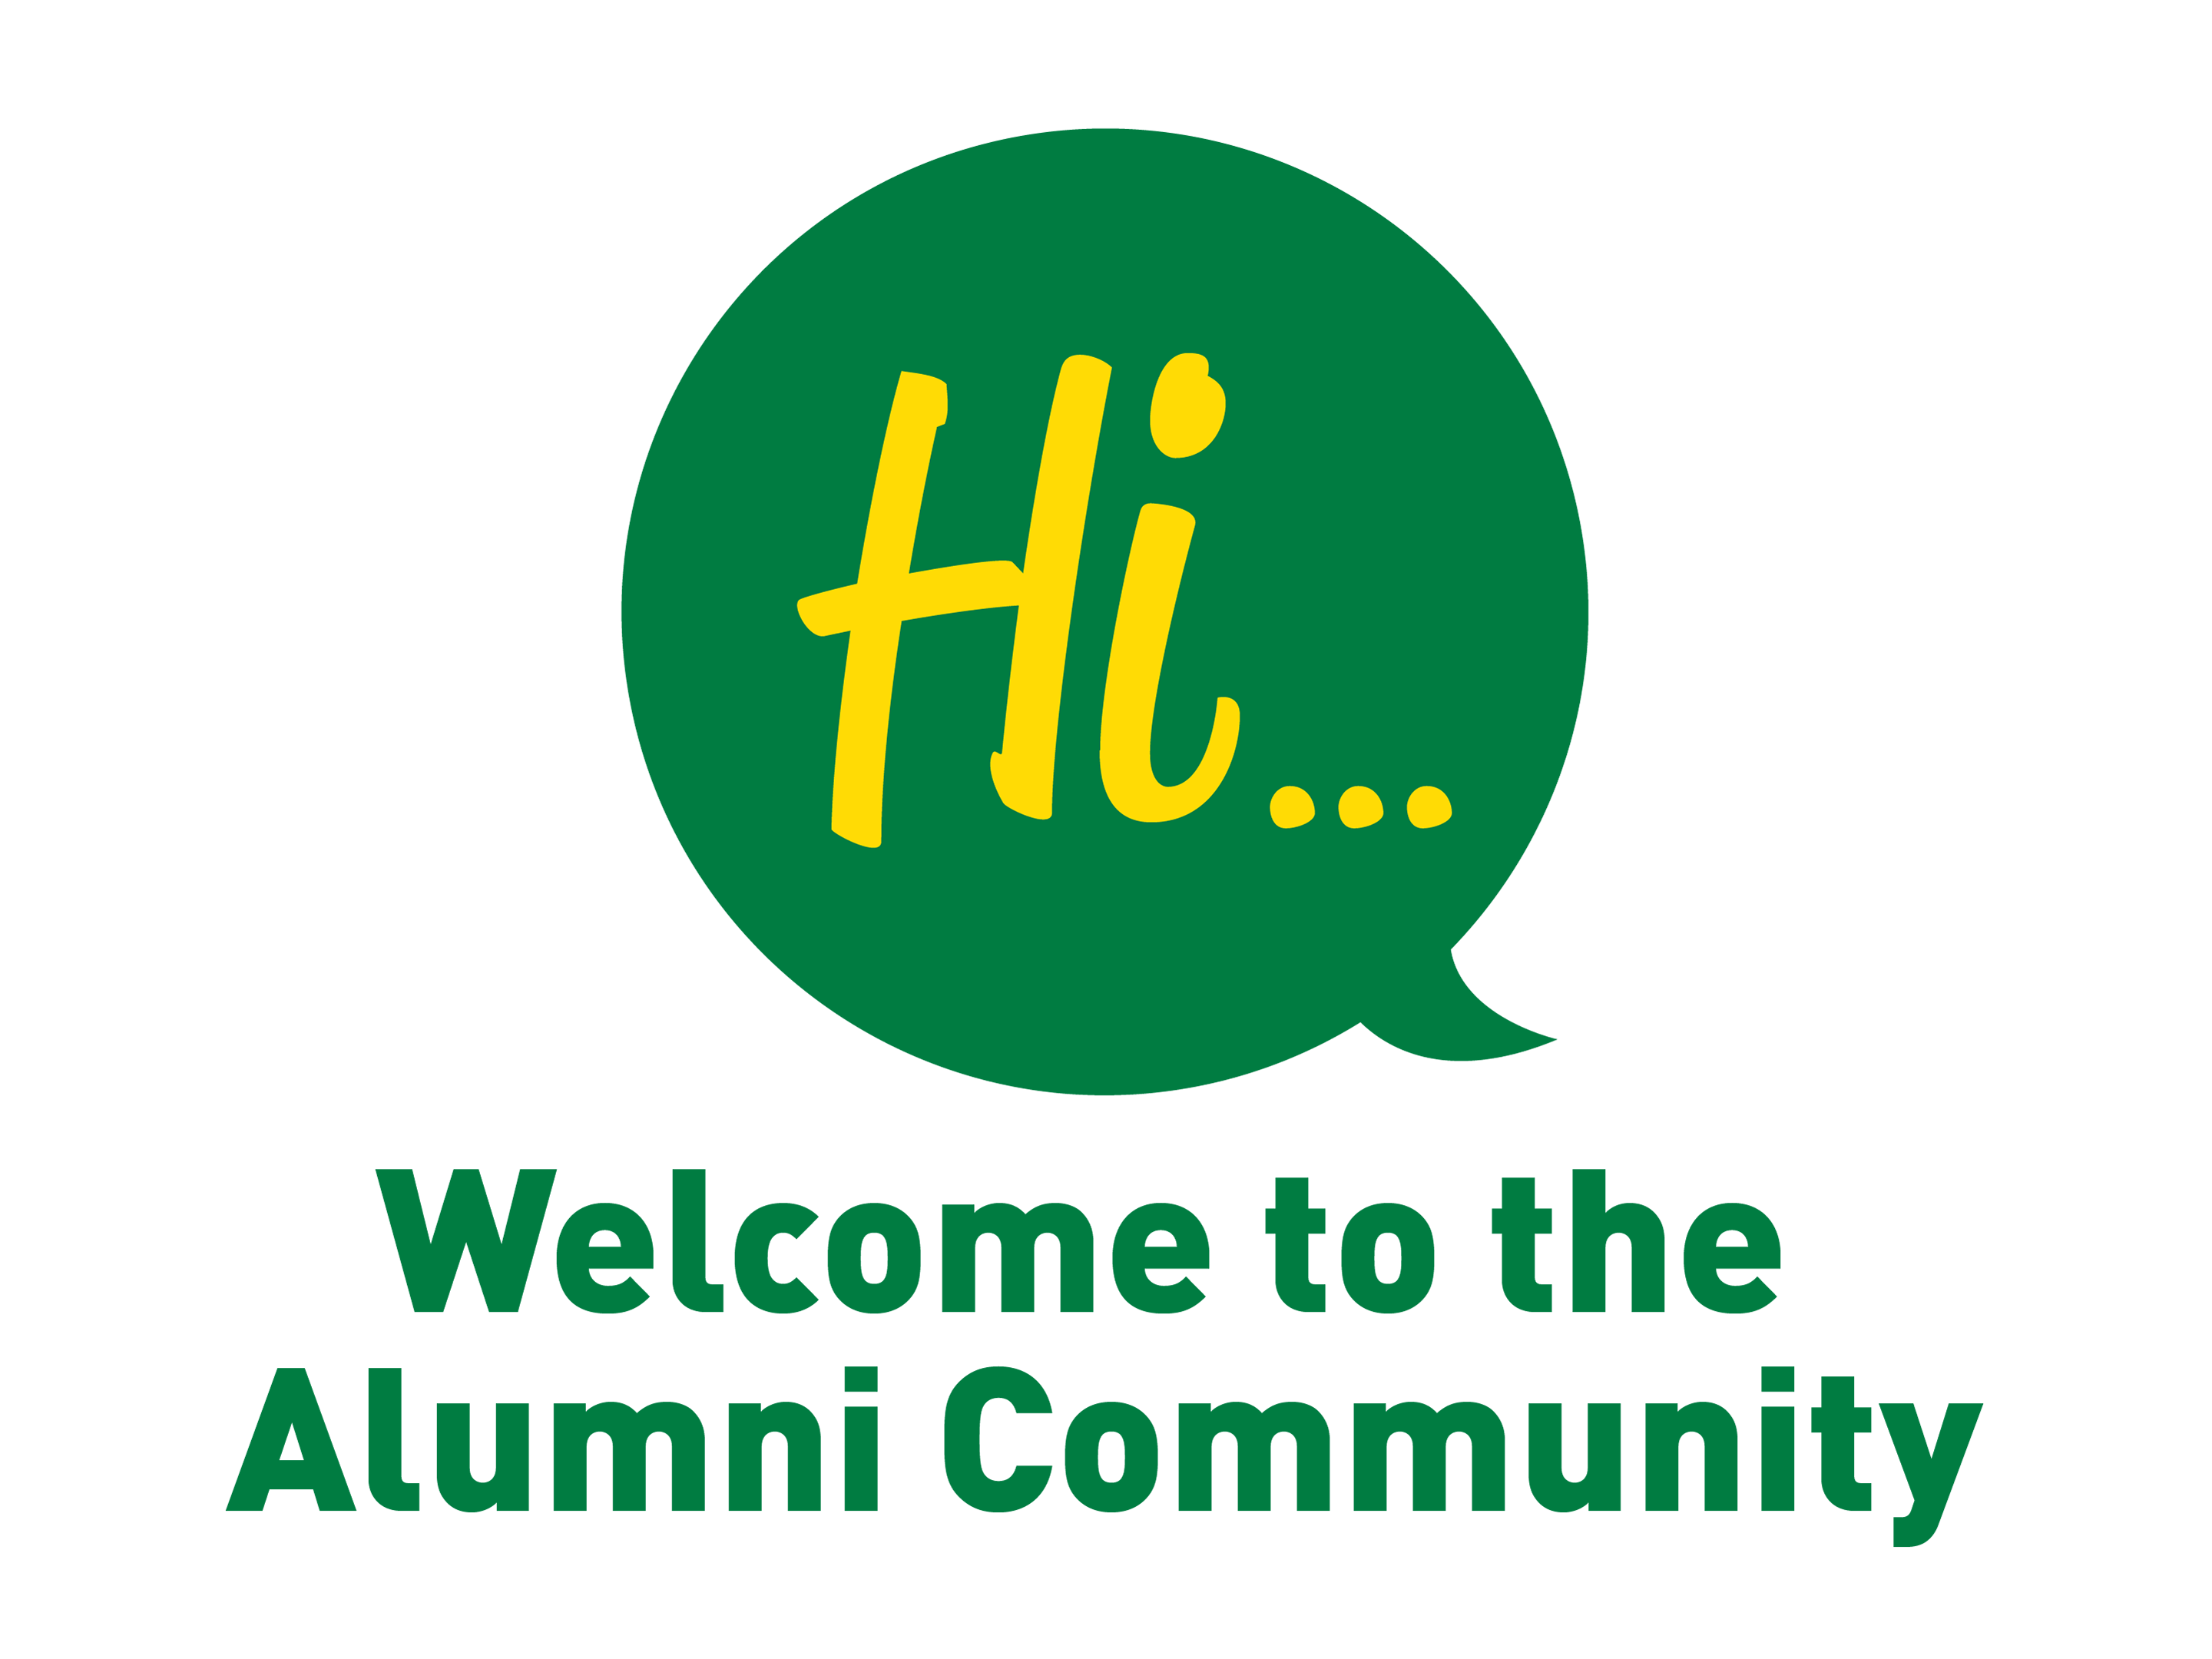 Alumni Community